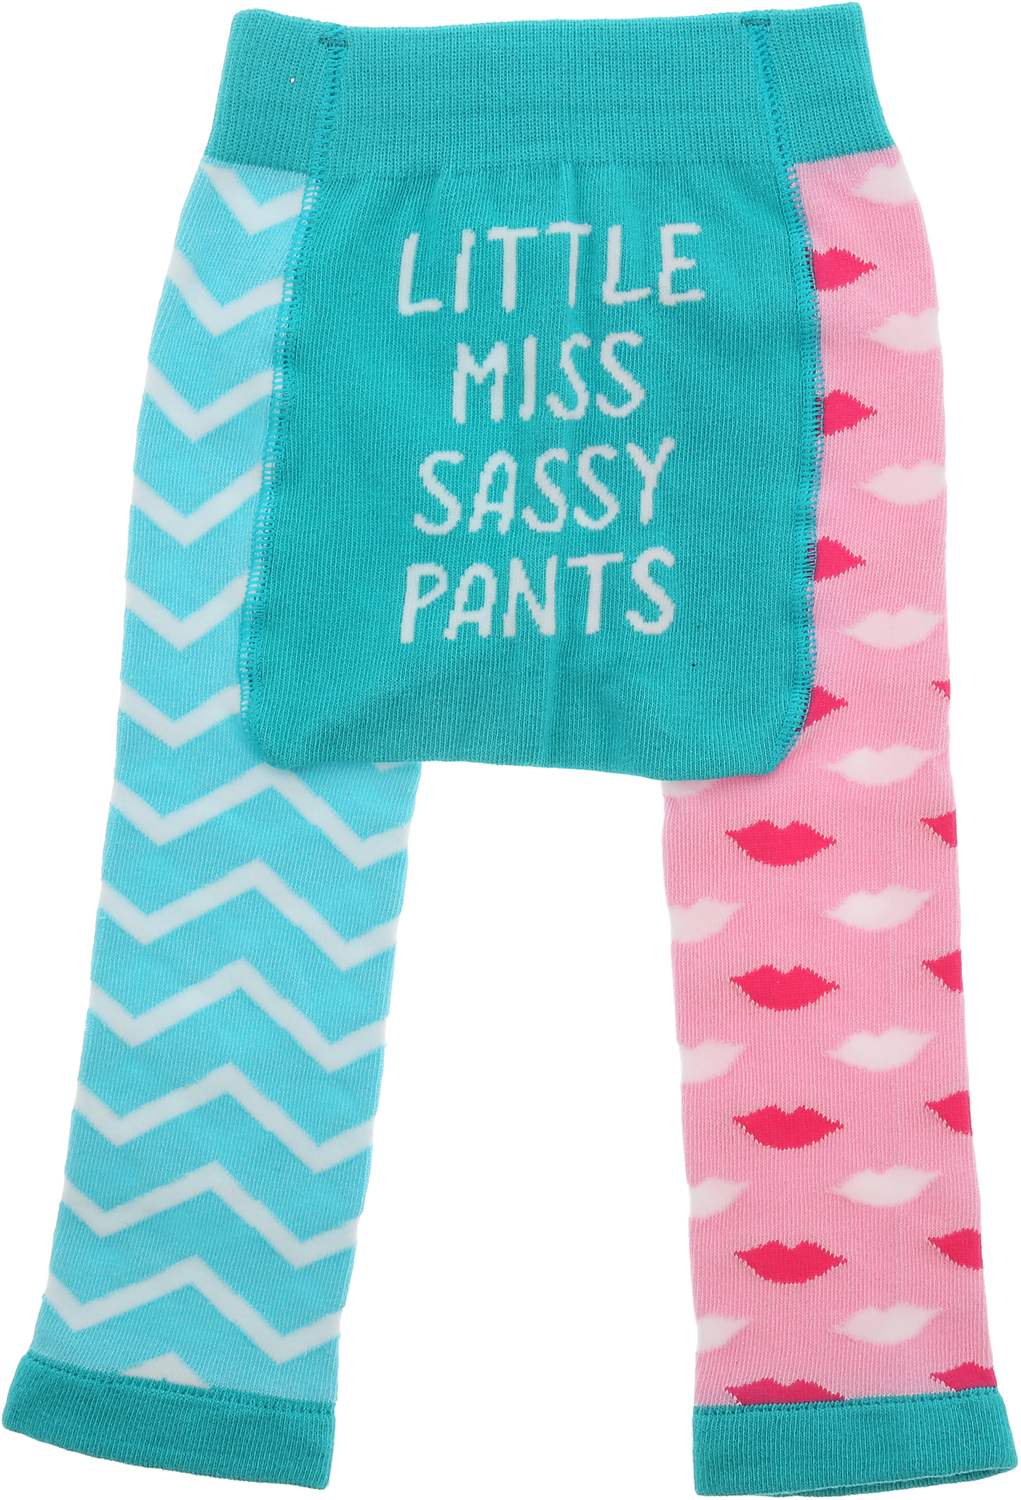 Sassy Pants by Sidewalk Talk - Sassy Pants - 6-12 Months Leggings